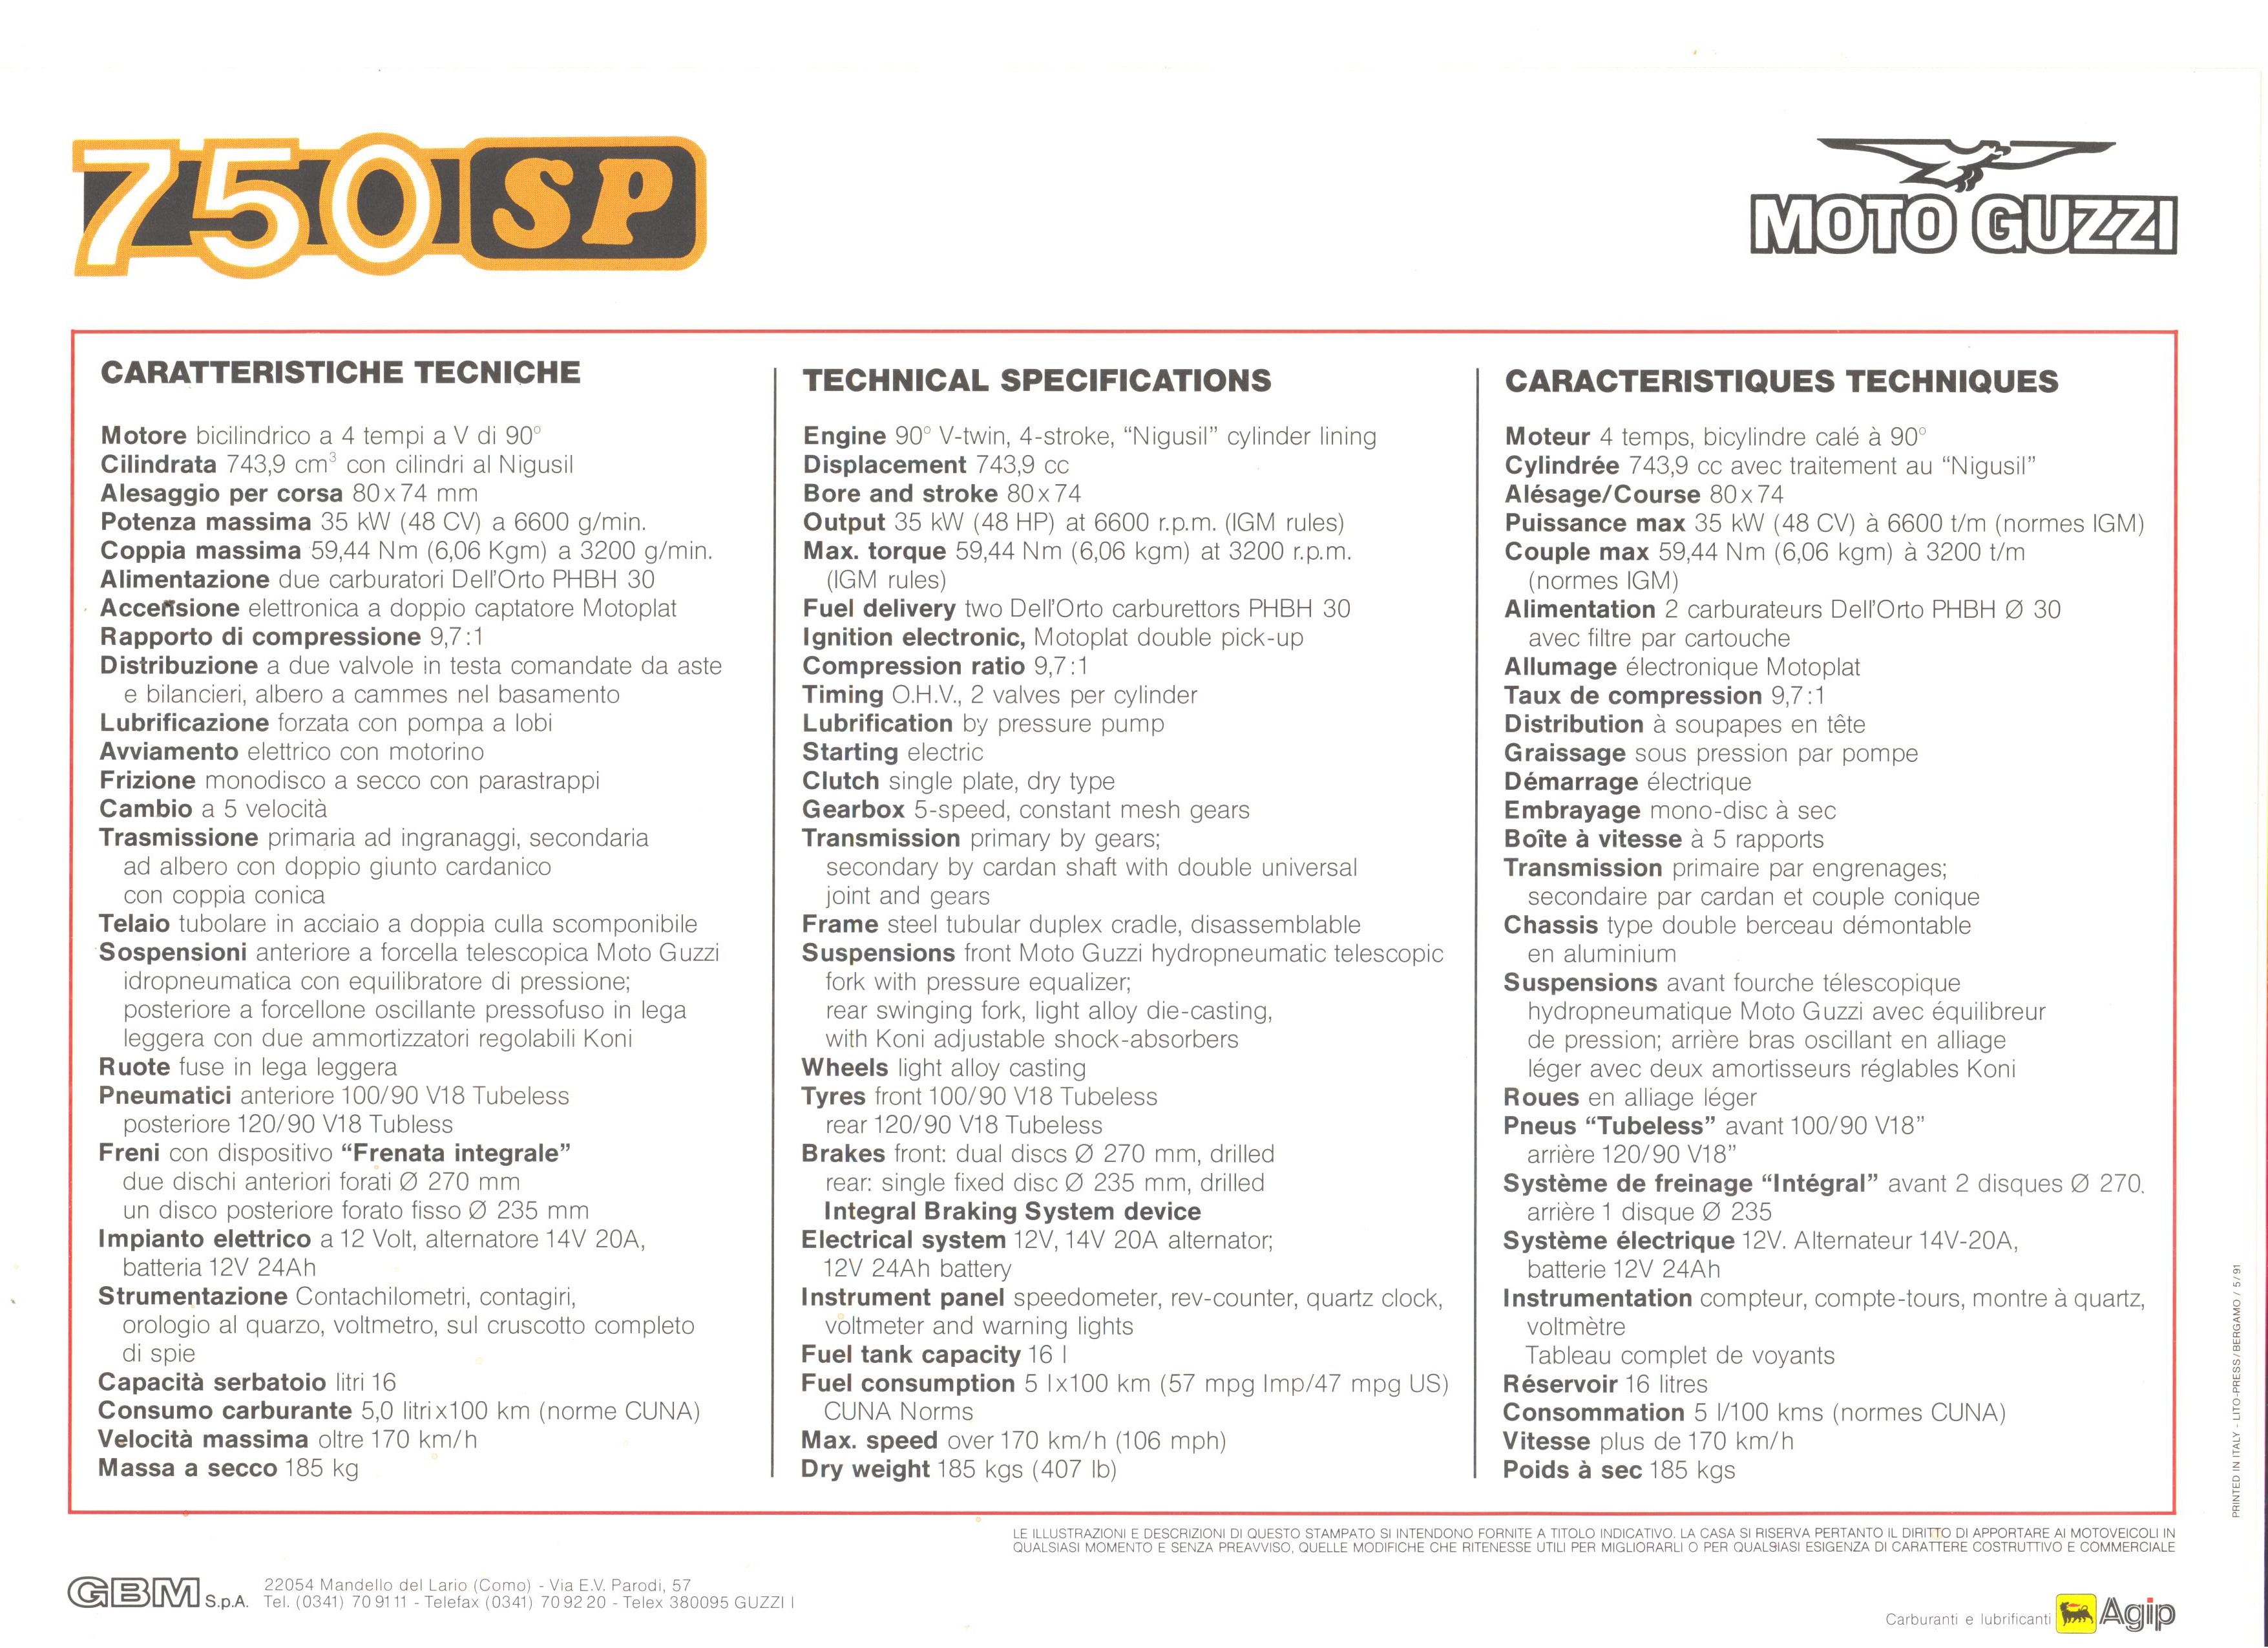 Moto Guzzi factory brochure: 750 SP